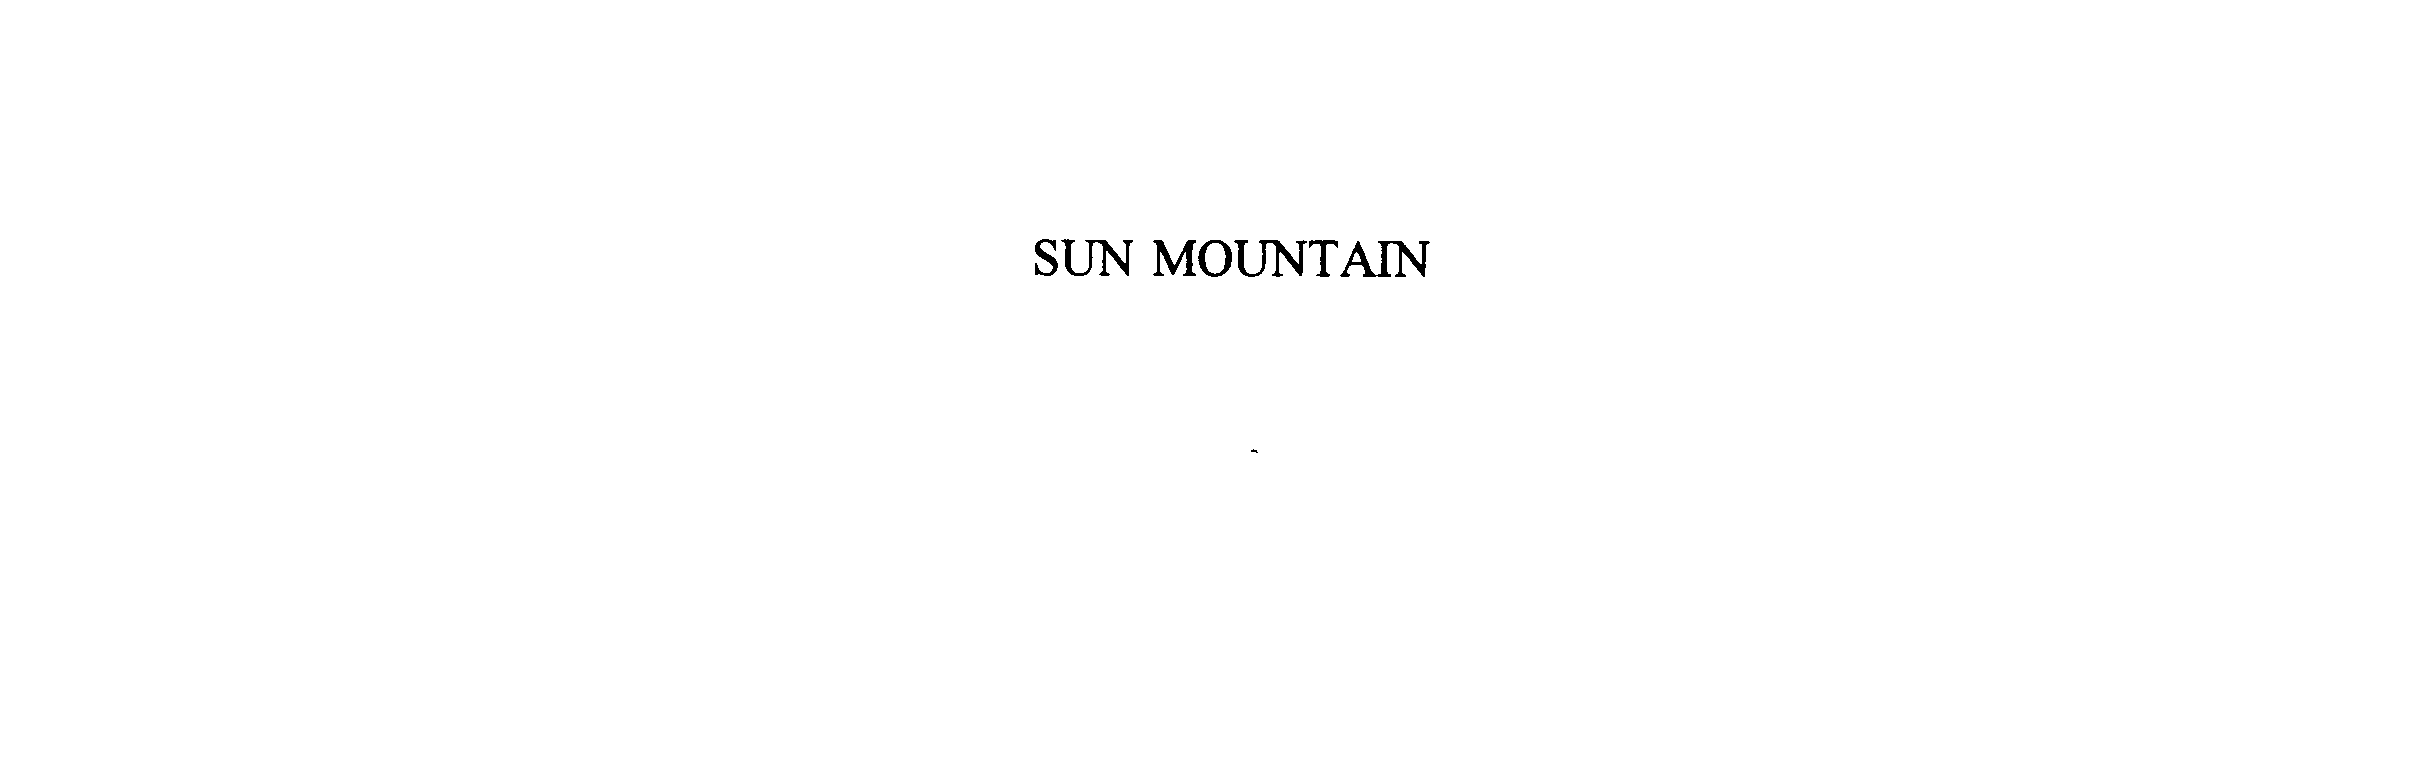  SUN MOUNTAIN